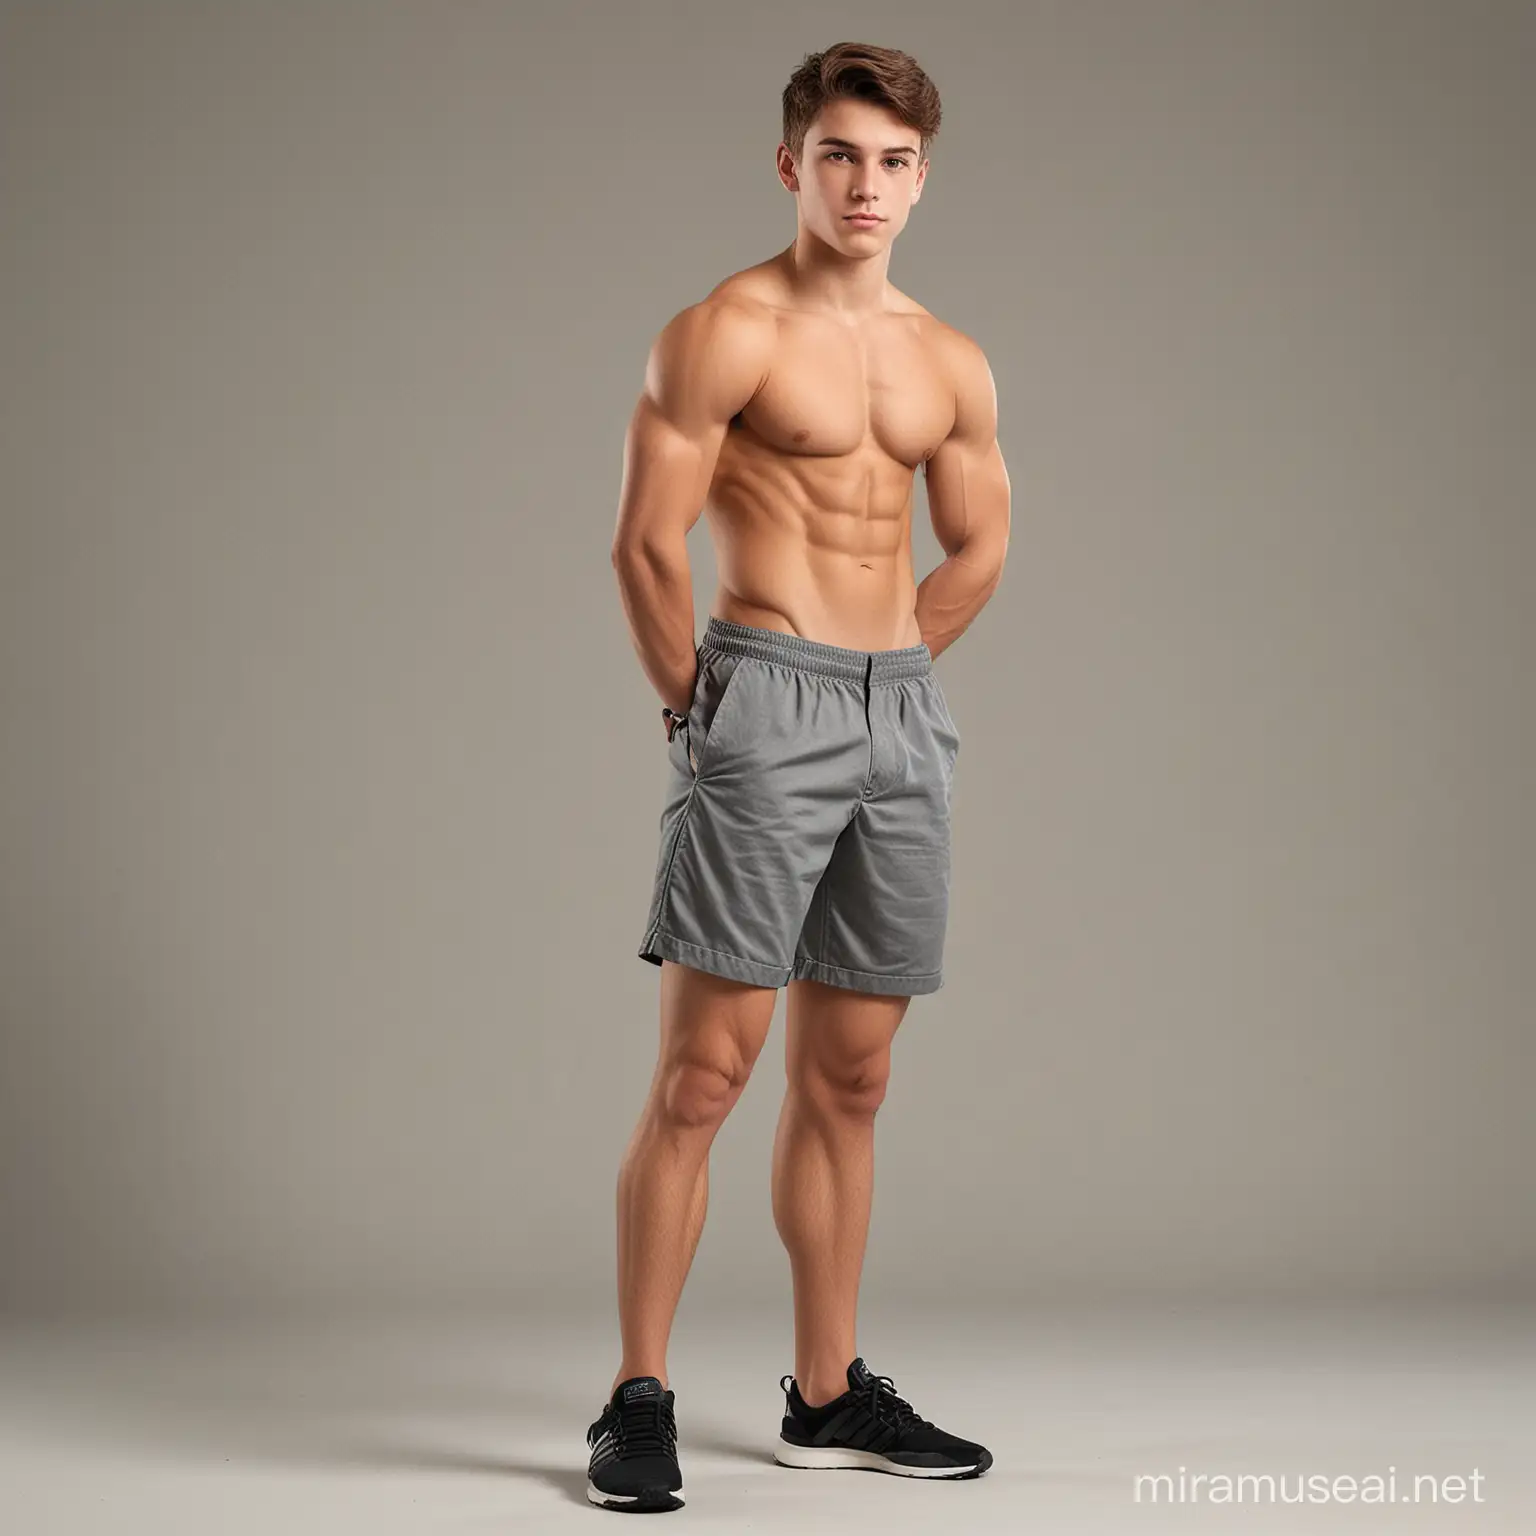 Muscular Teenage Male Demonstrating Leg Strength